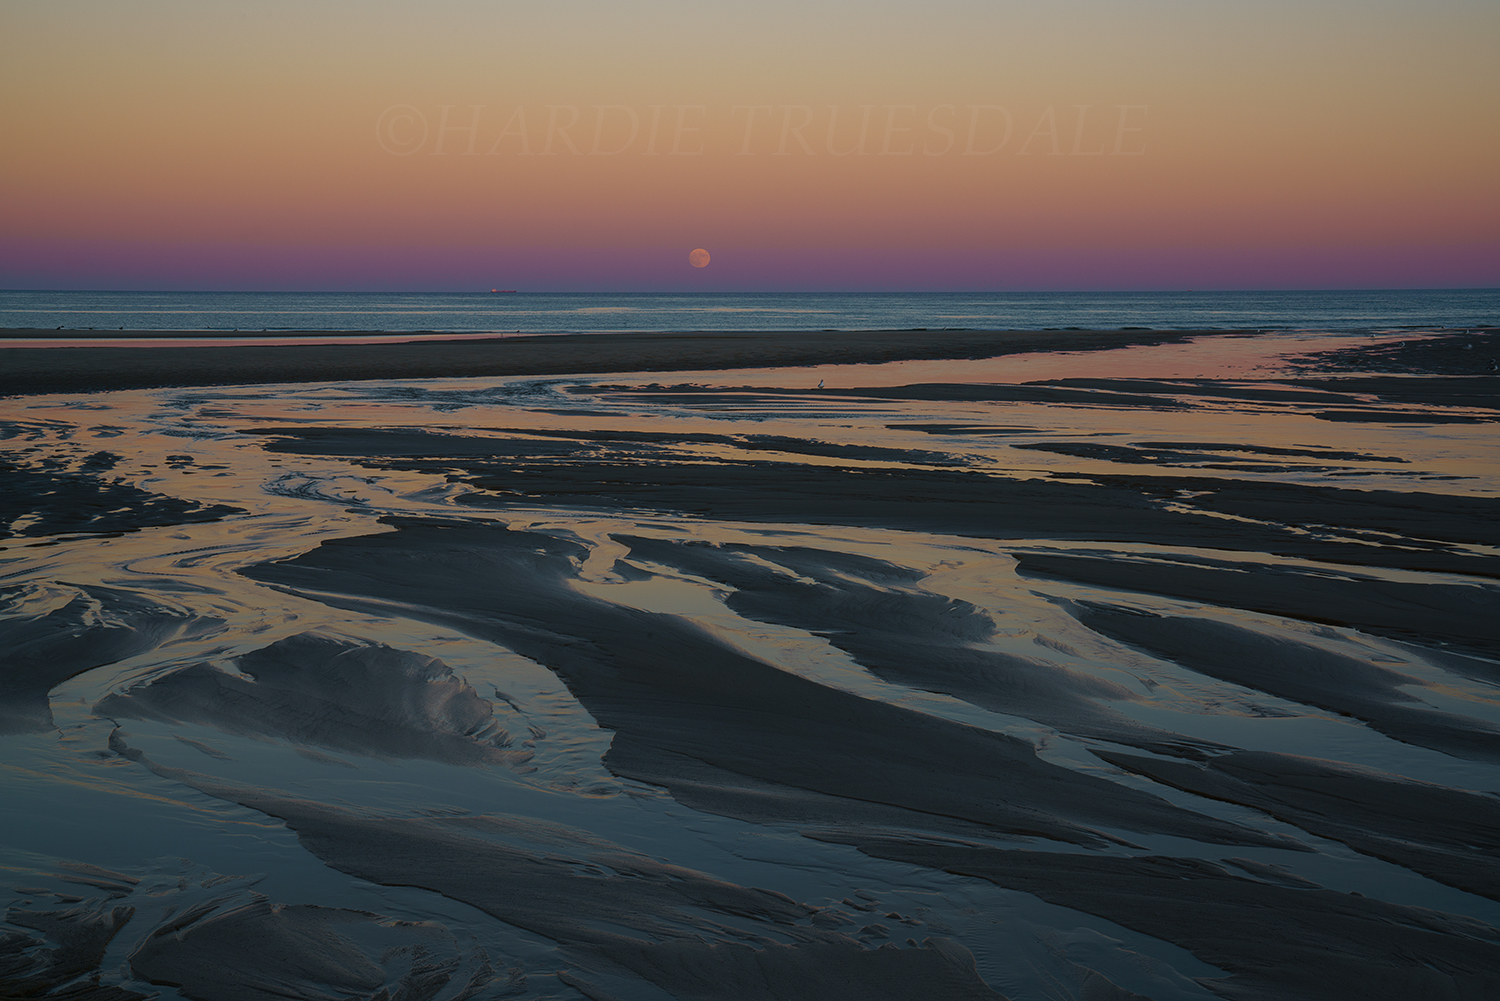 CC#172 "Super Moon Rise", Cape Cod National Seashore